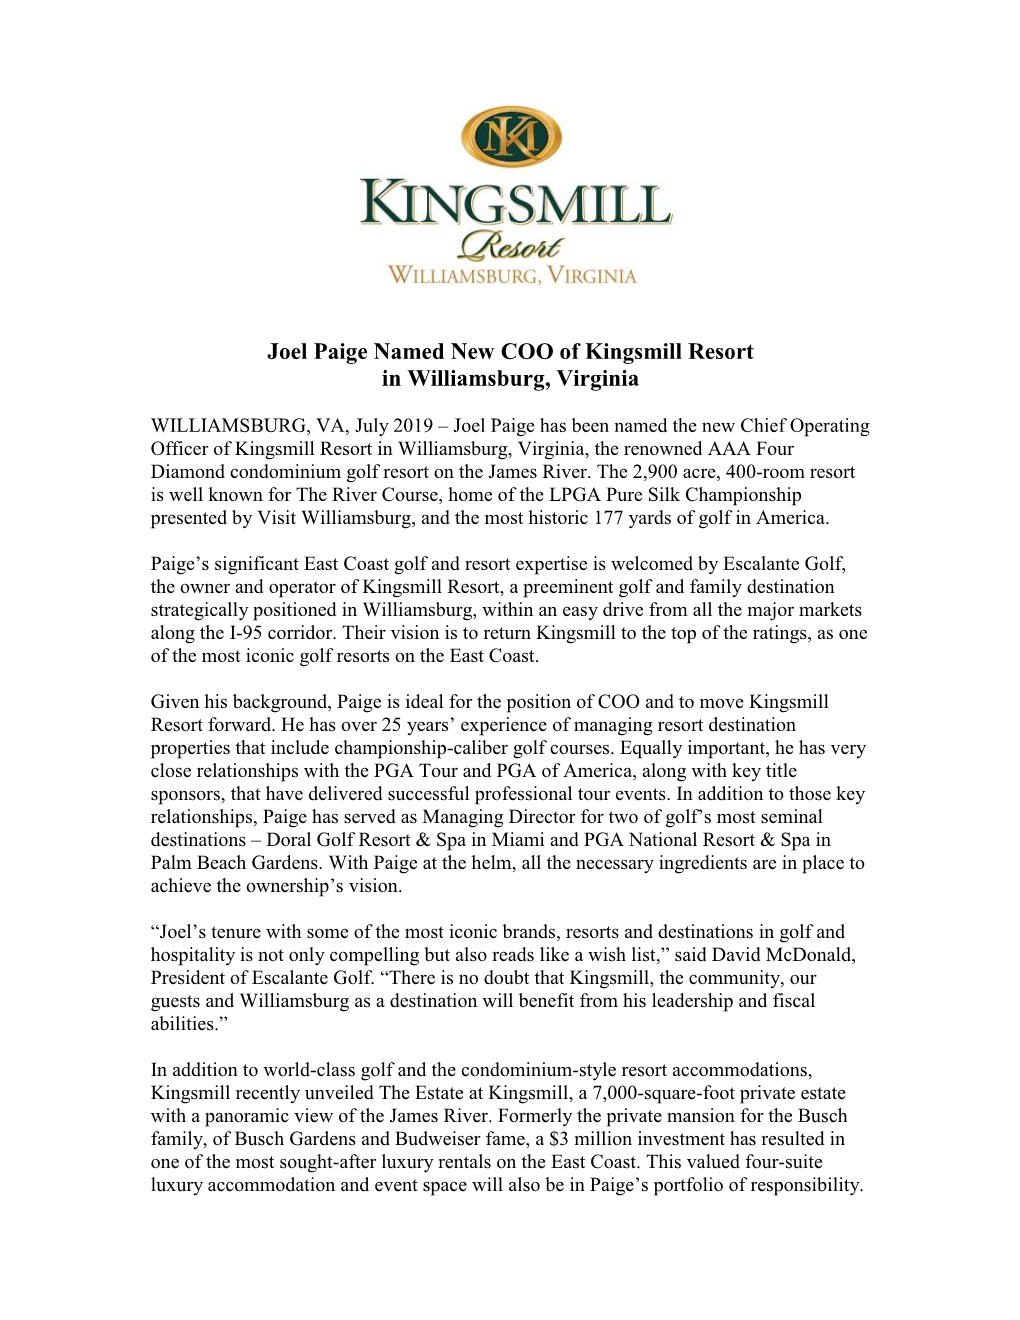 Joel Paige Named New COO of Kingsmill Resort in Williamsburg, Virginia